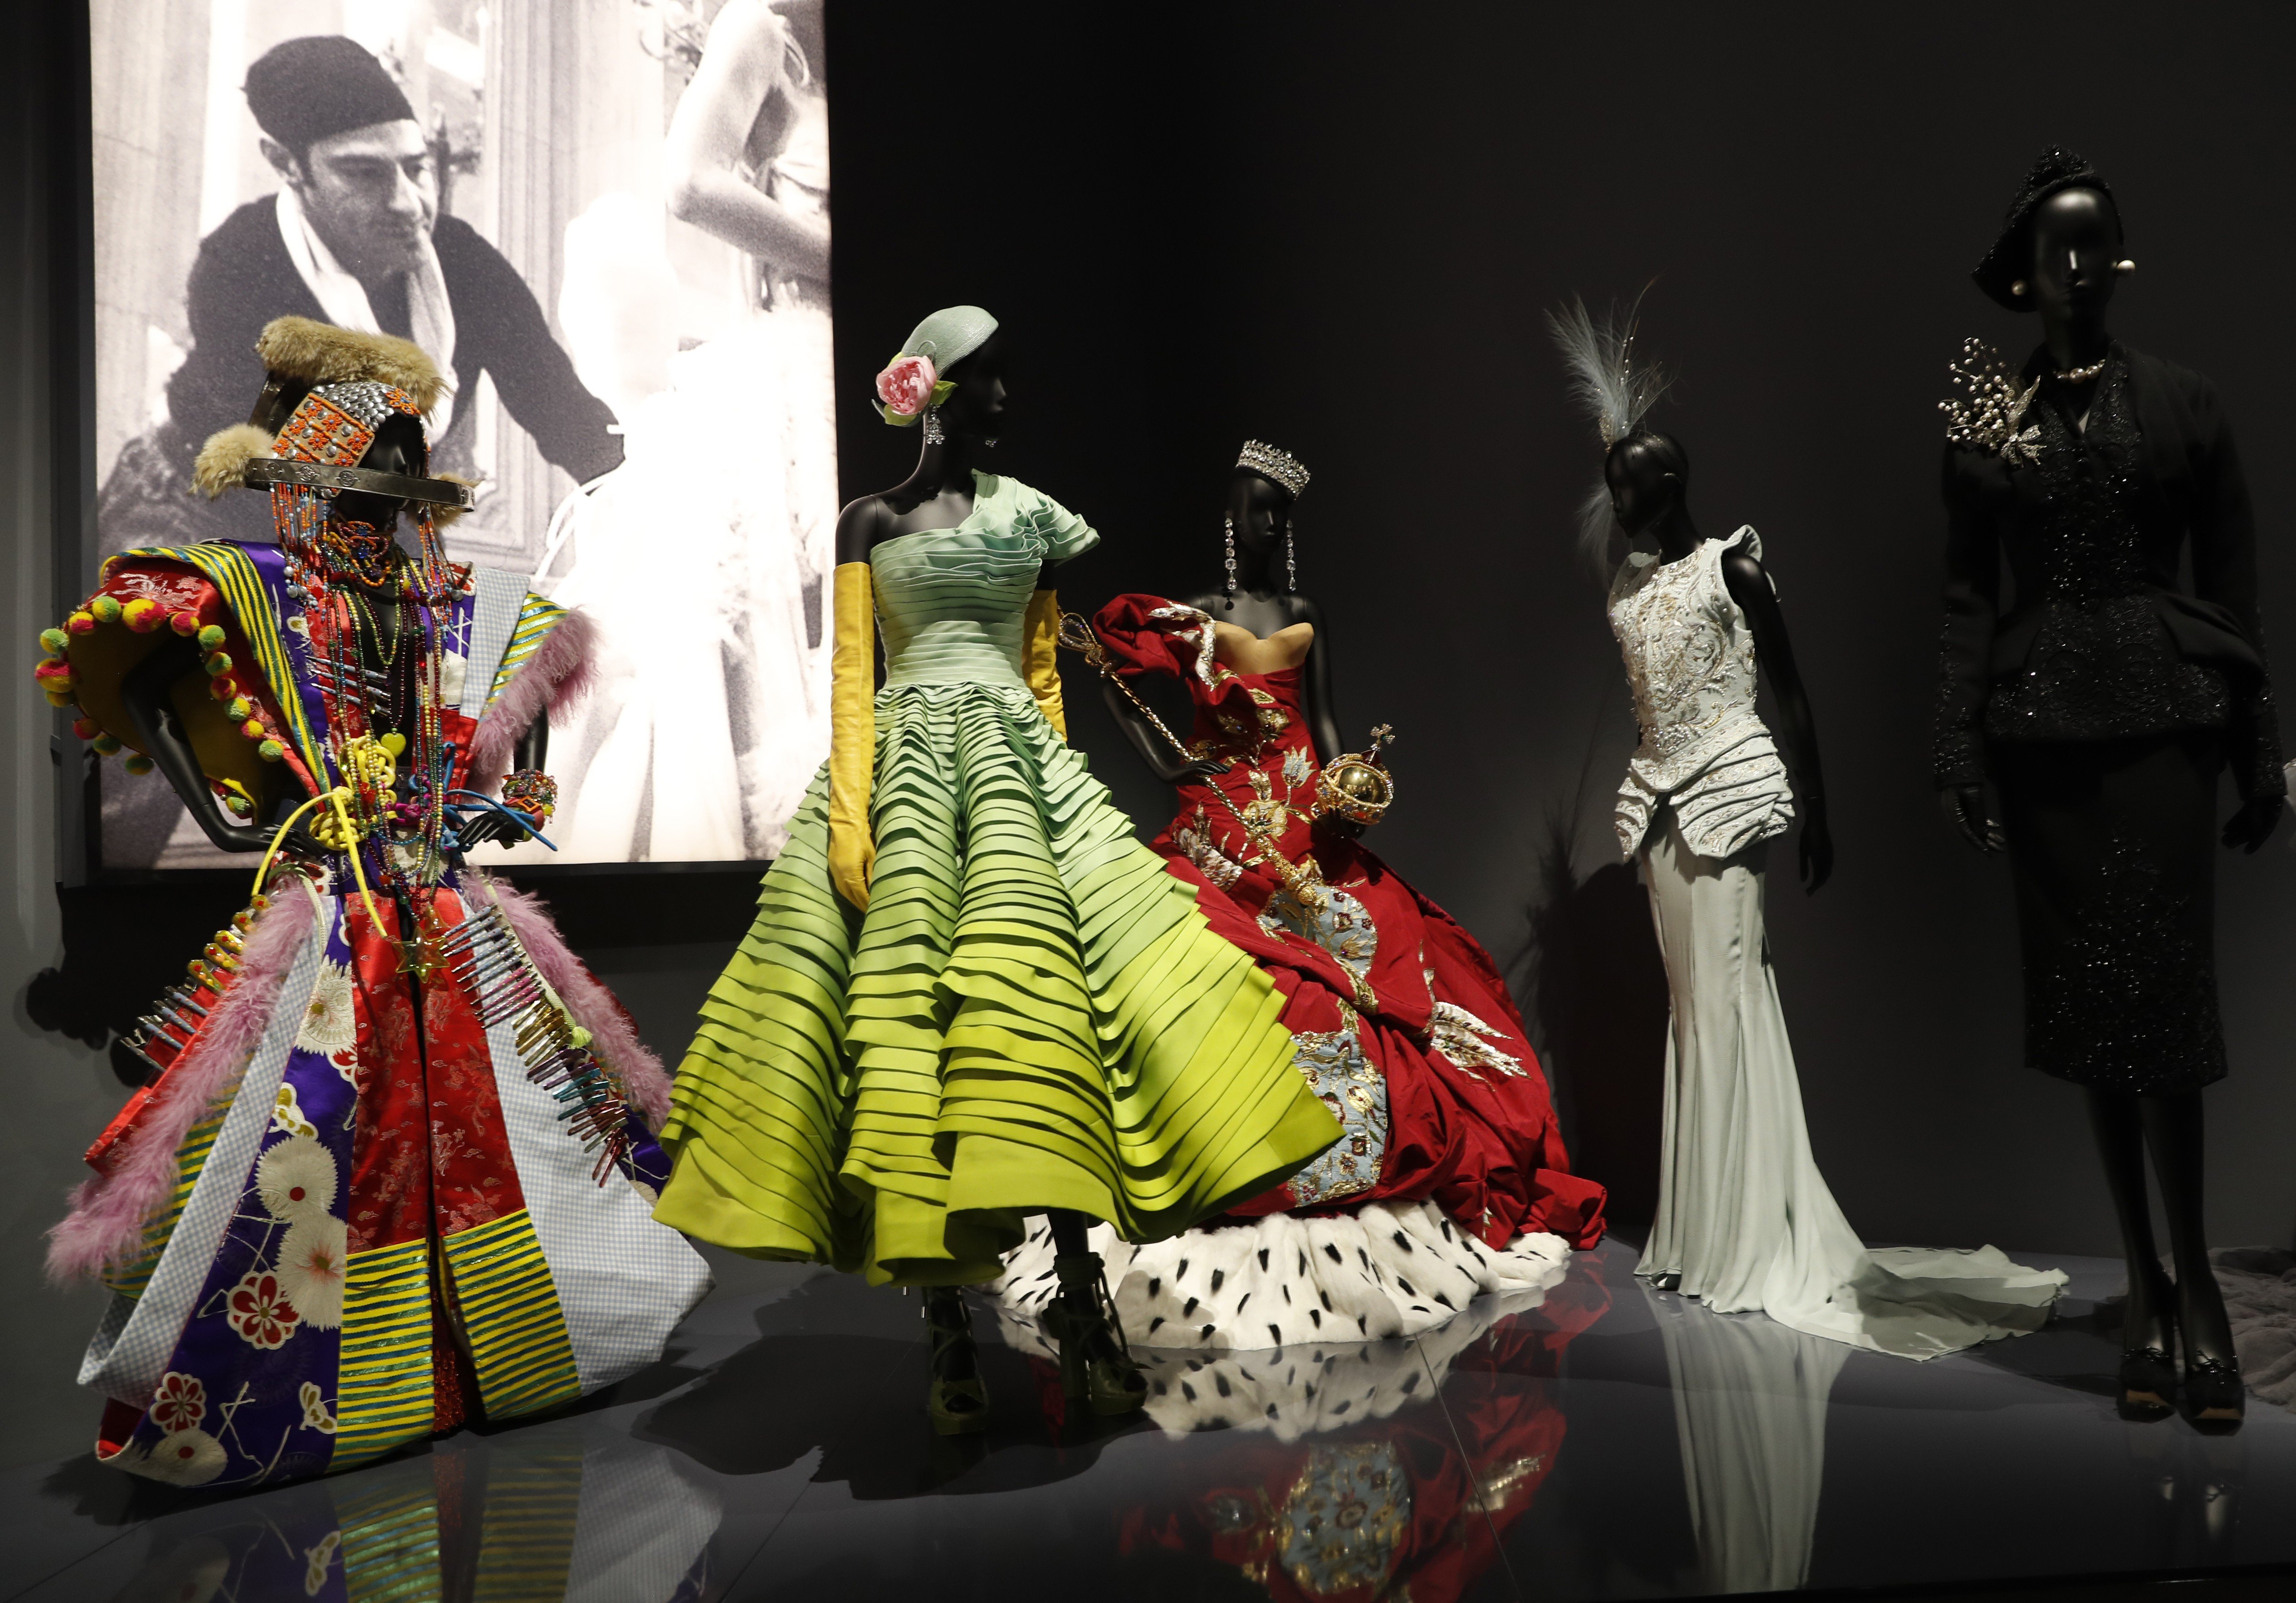 Christian Dior: Designer of Dreams”: Victoria and Albert Museum in